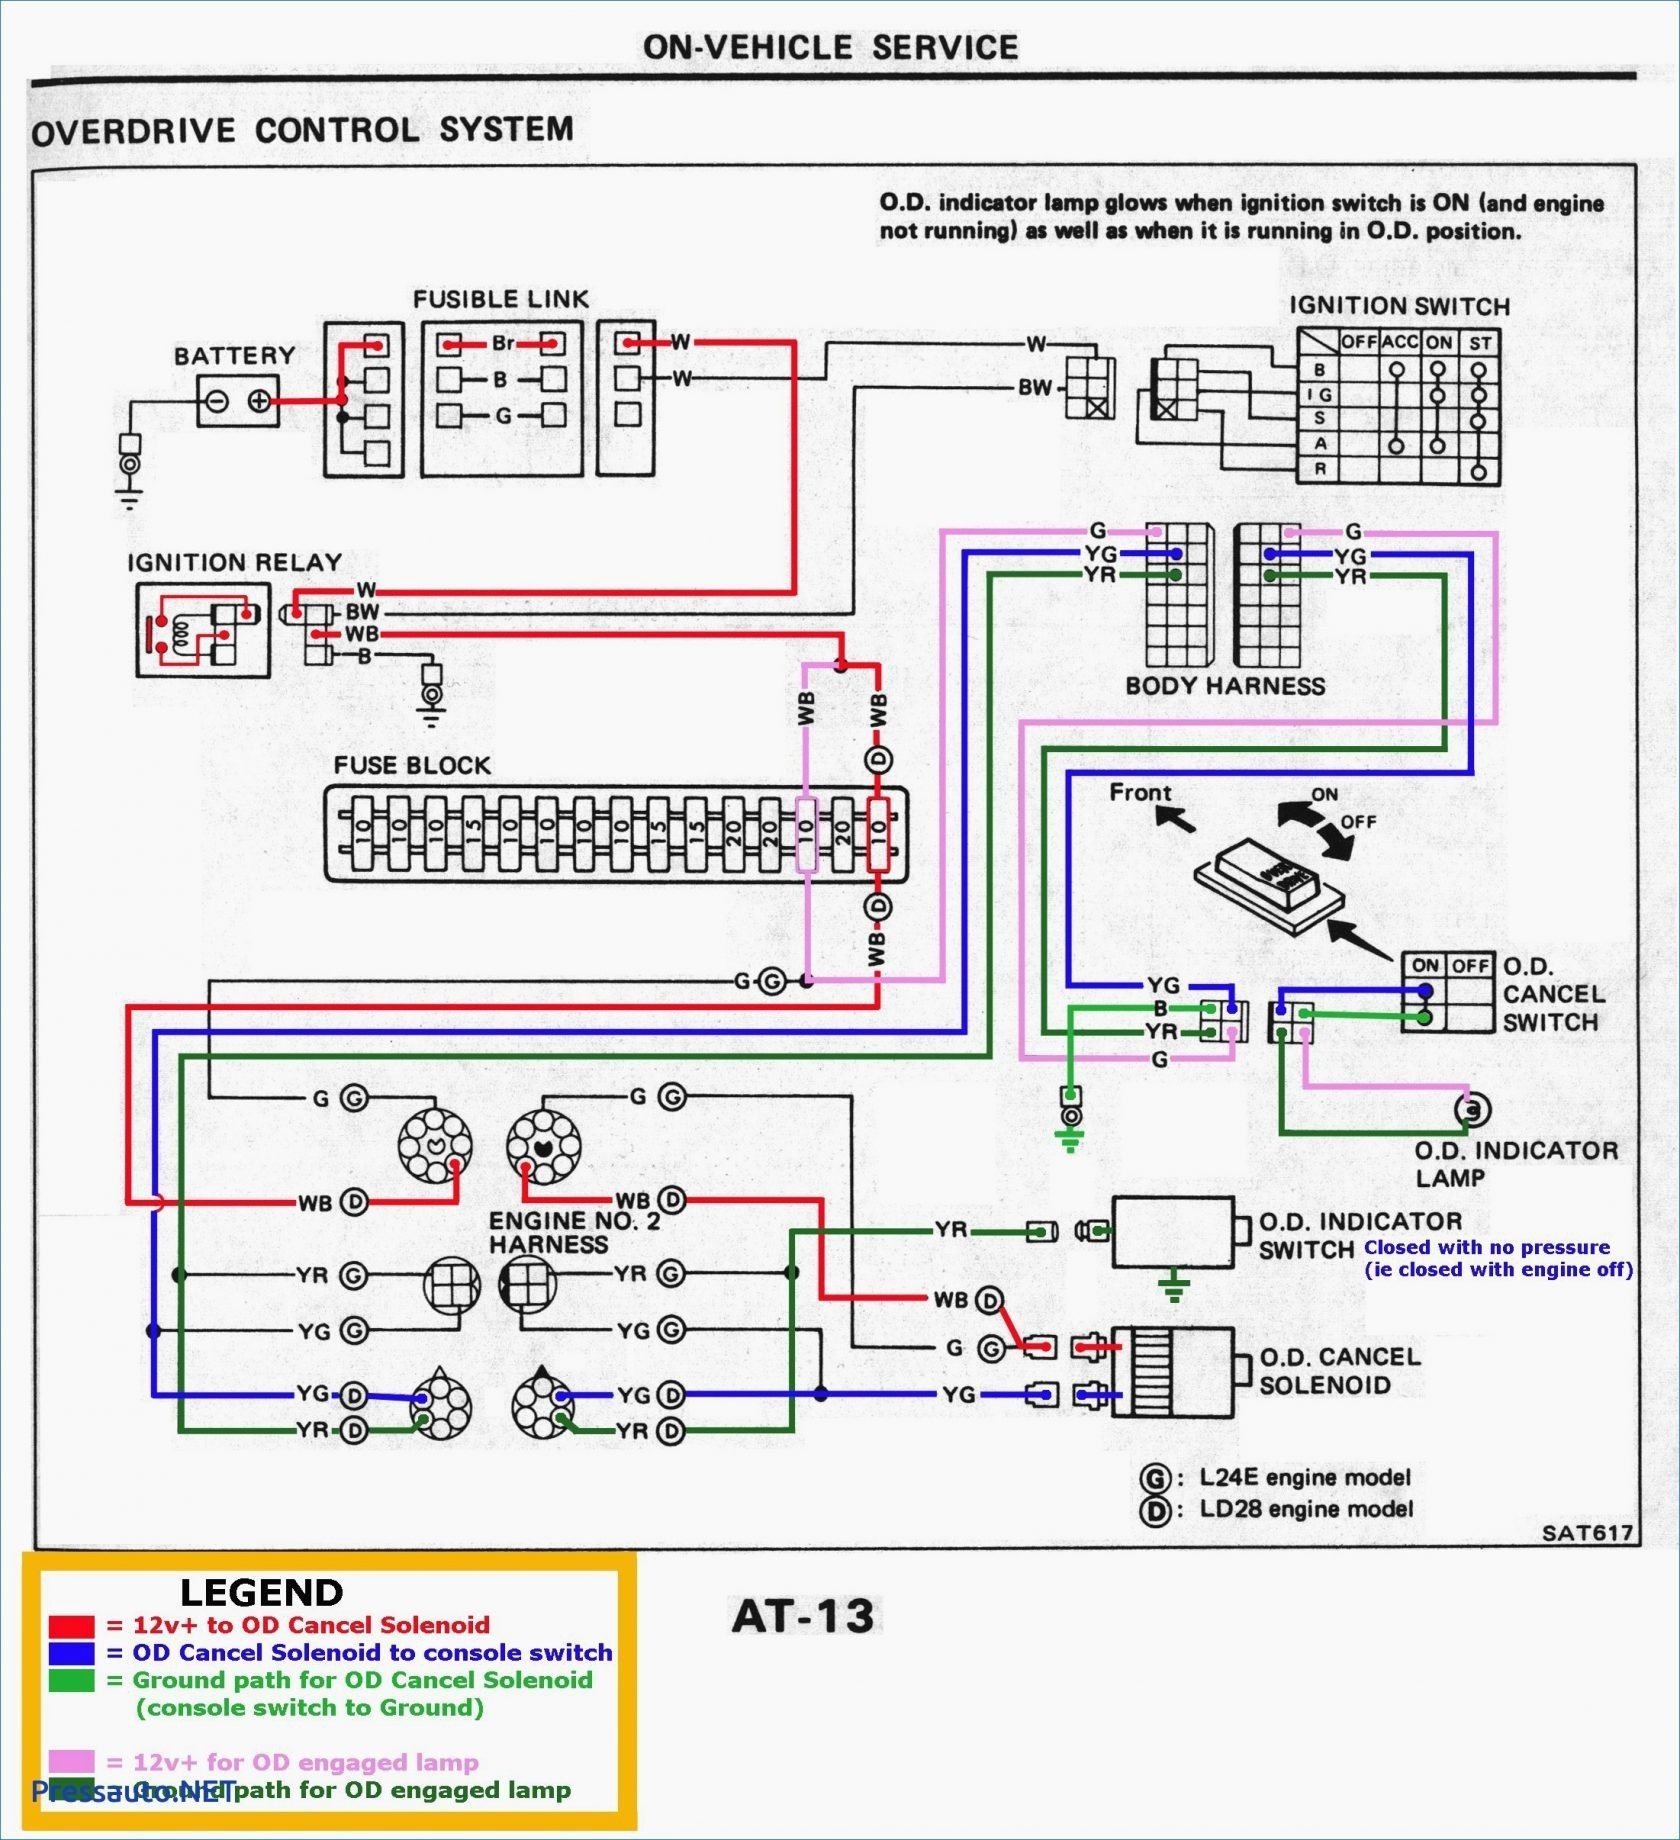 Car Subwoofer Wiring Diagram Amplifier Wiring Diagrams Wiring Diagram toolbox Of Car Subwoofer Wiring Diagram